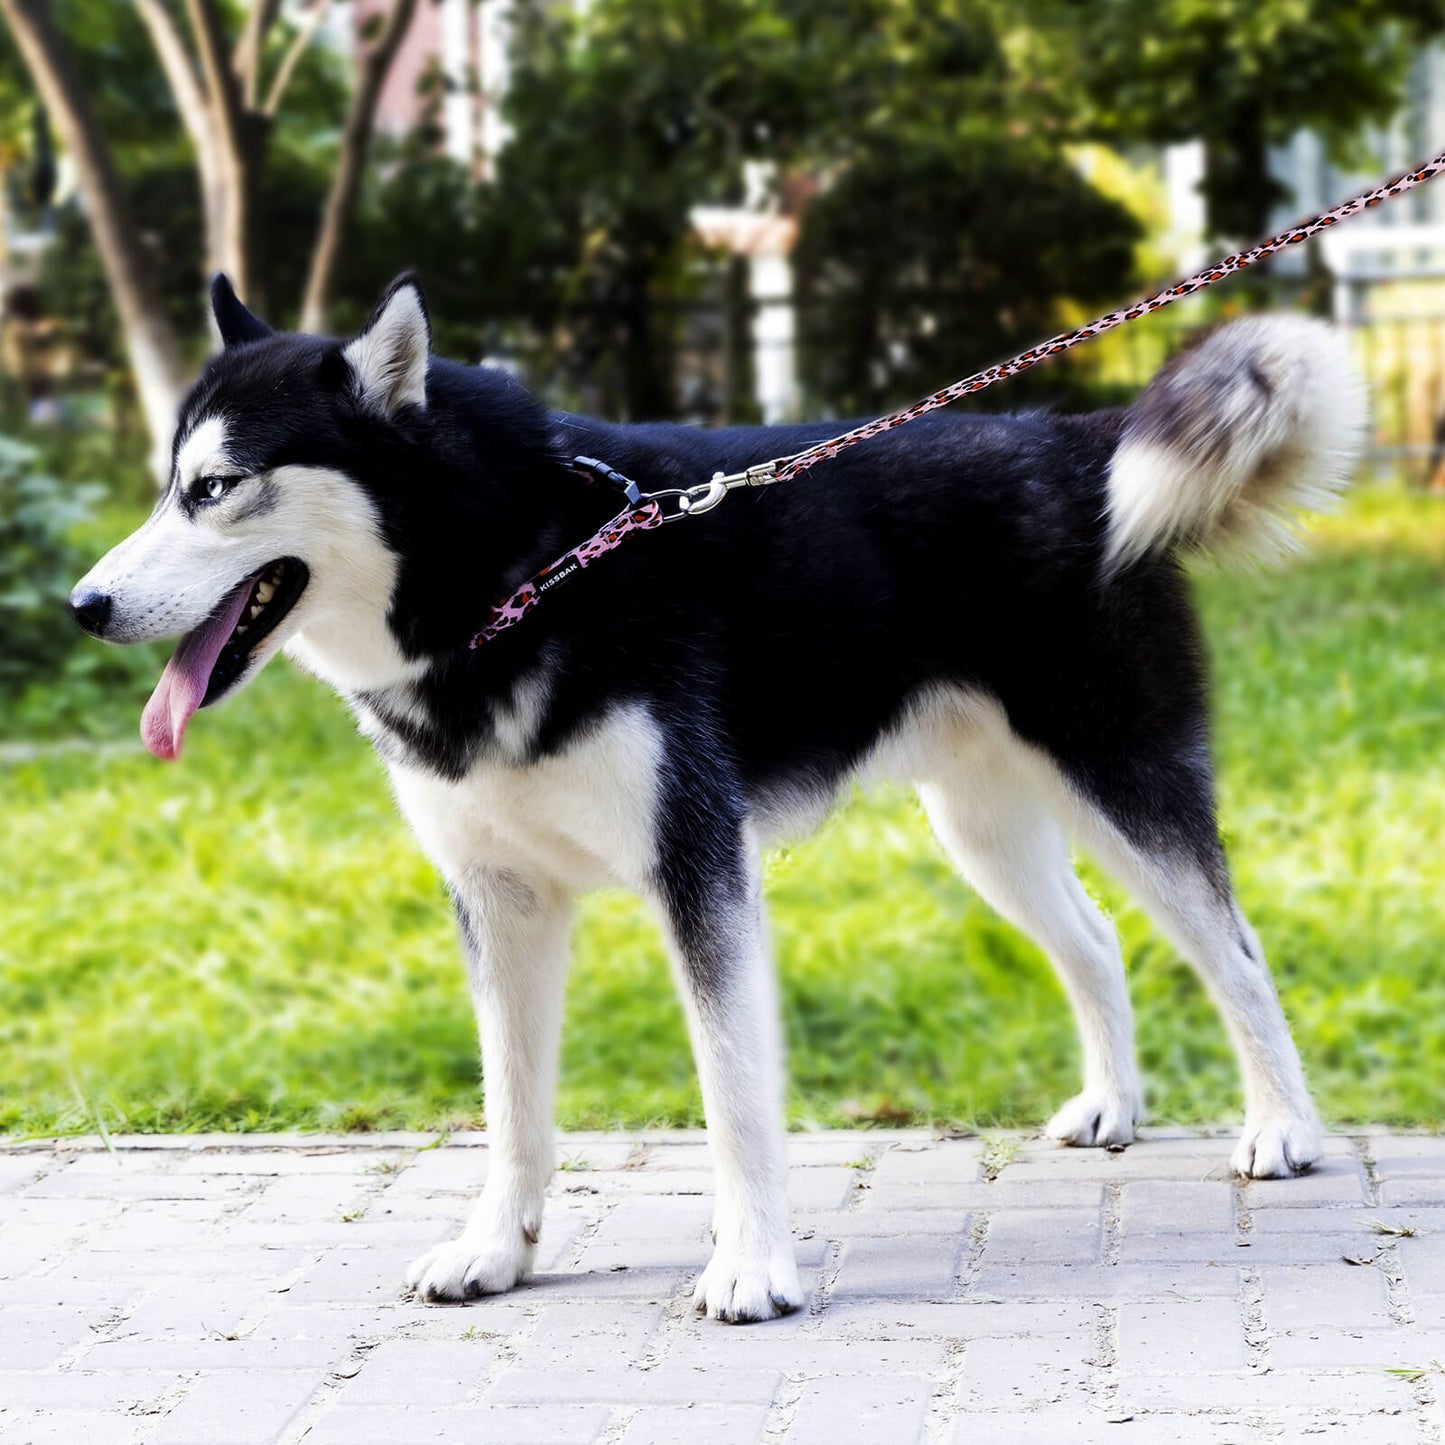 KISSBAK Dog Collar for Small-Medium-Large Dogs - Special Design Cute G